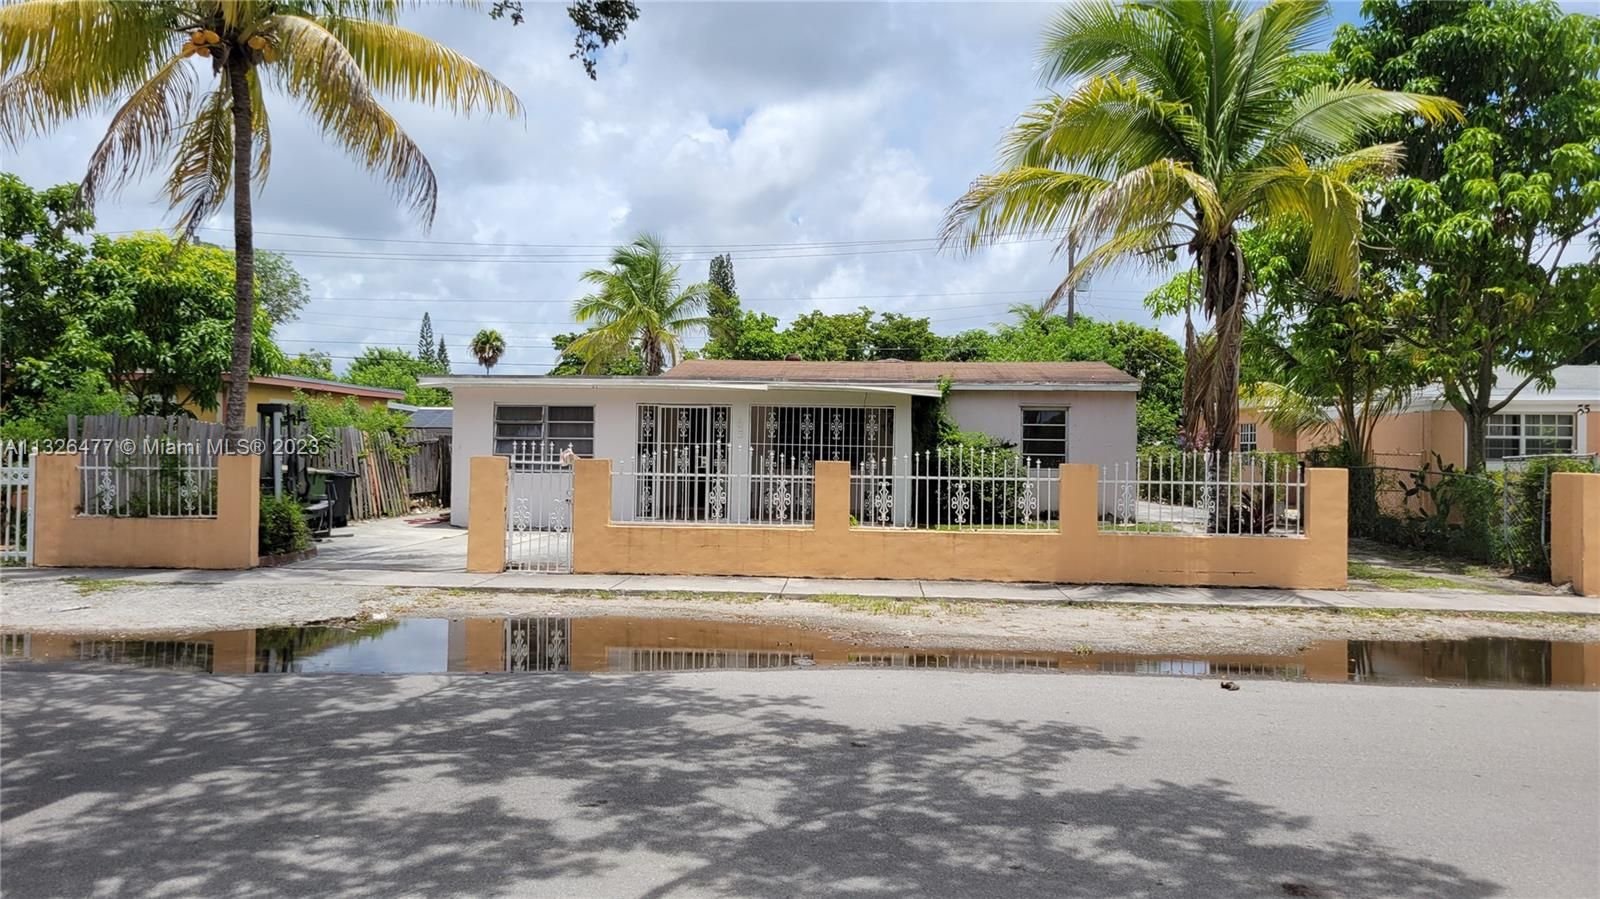 Real estate property located at 65 124th St, Miami-Dade County, North Miami, FL